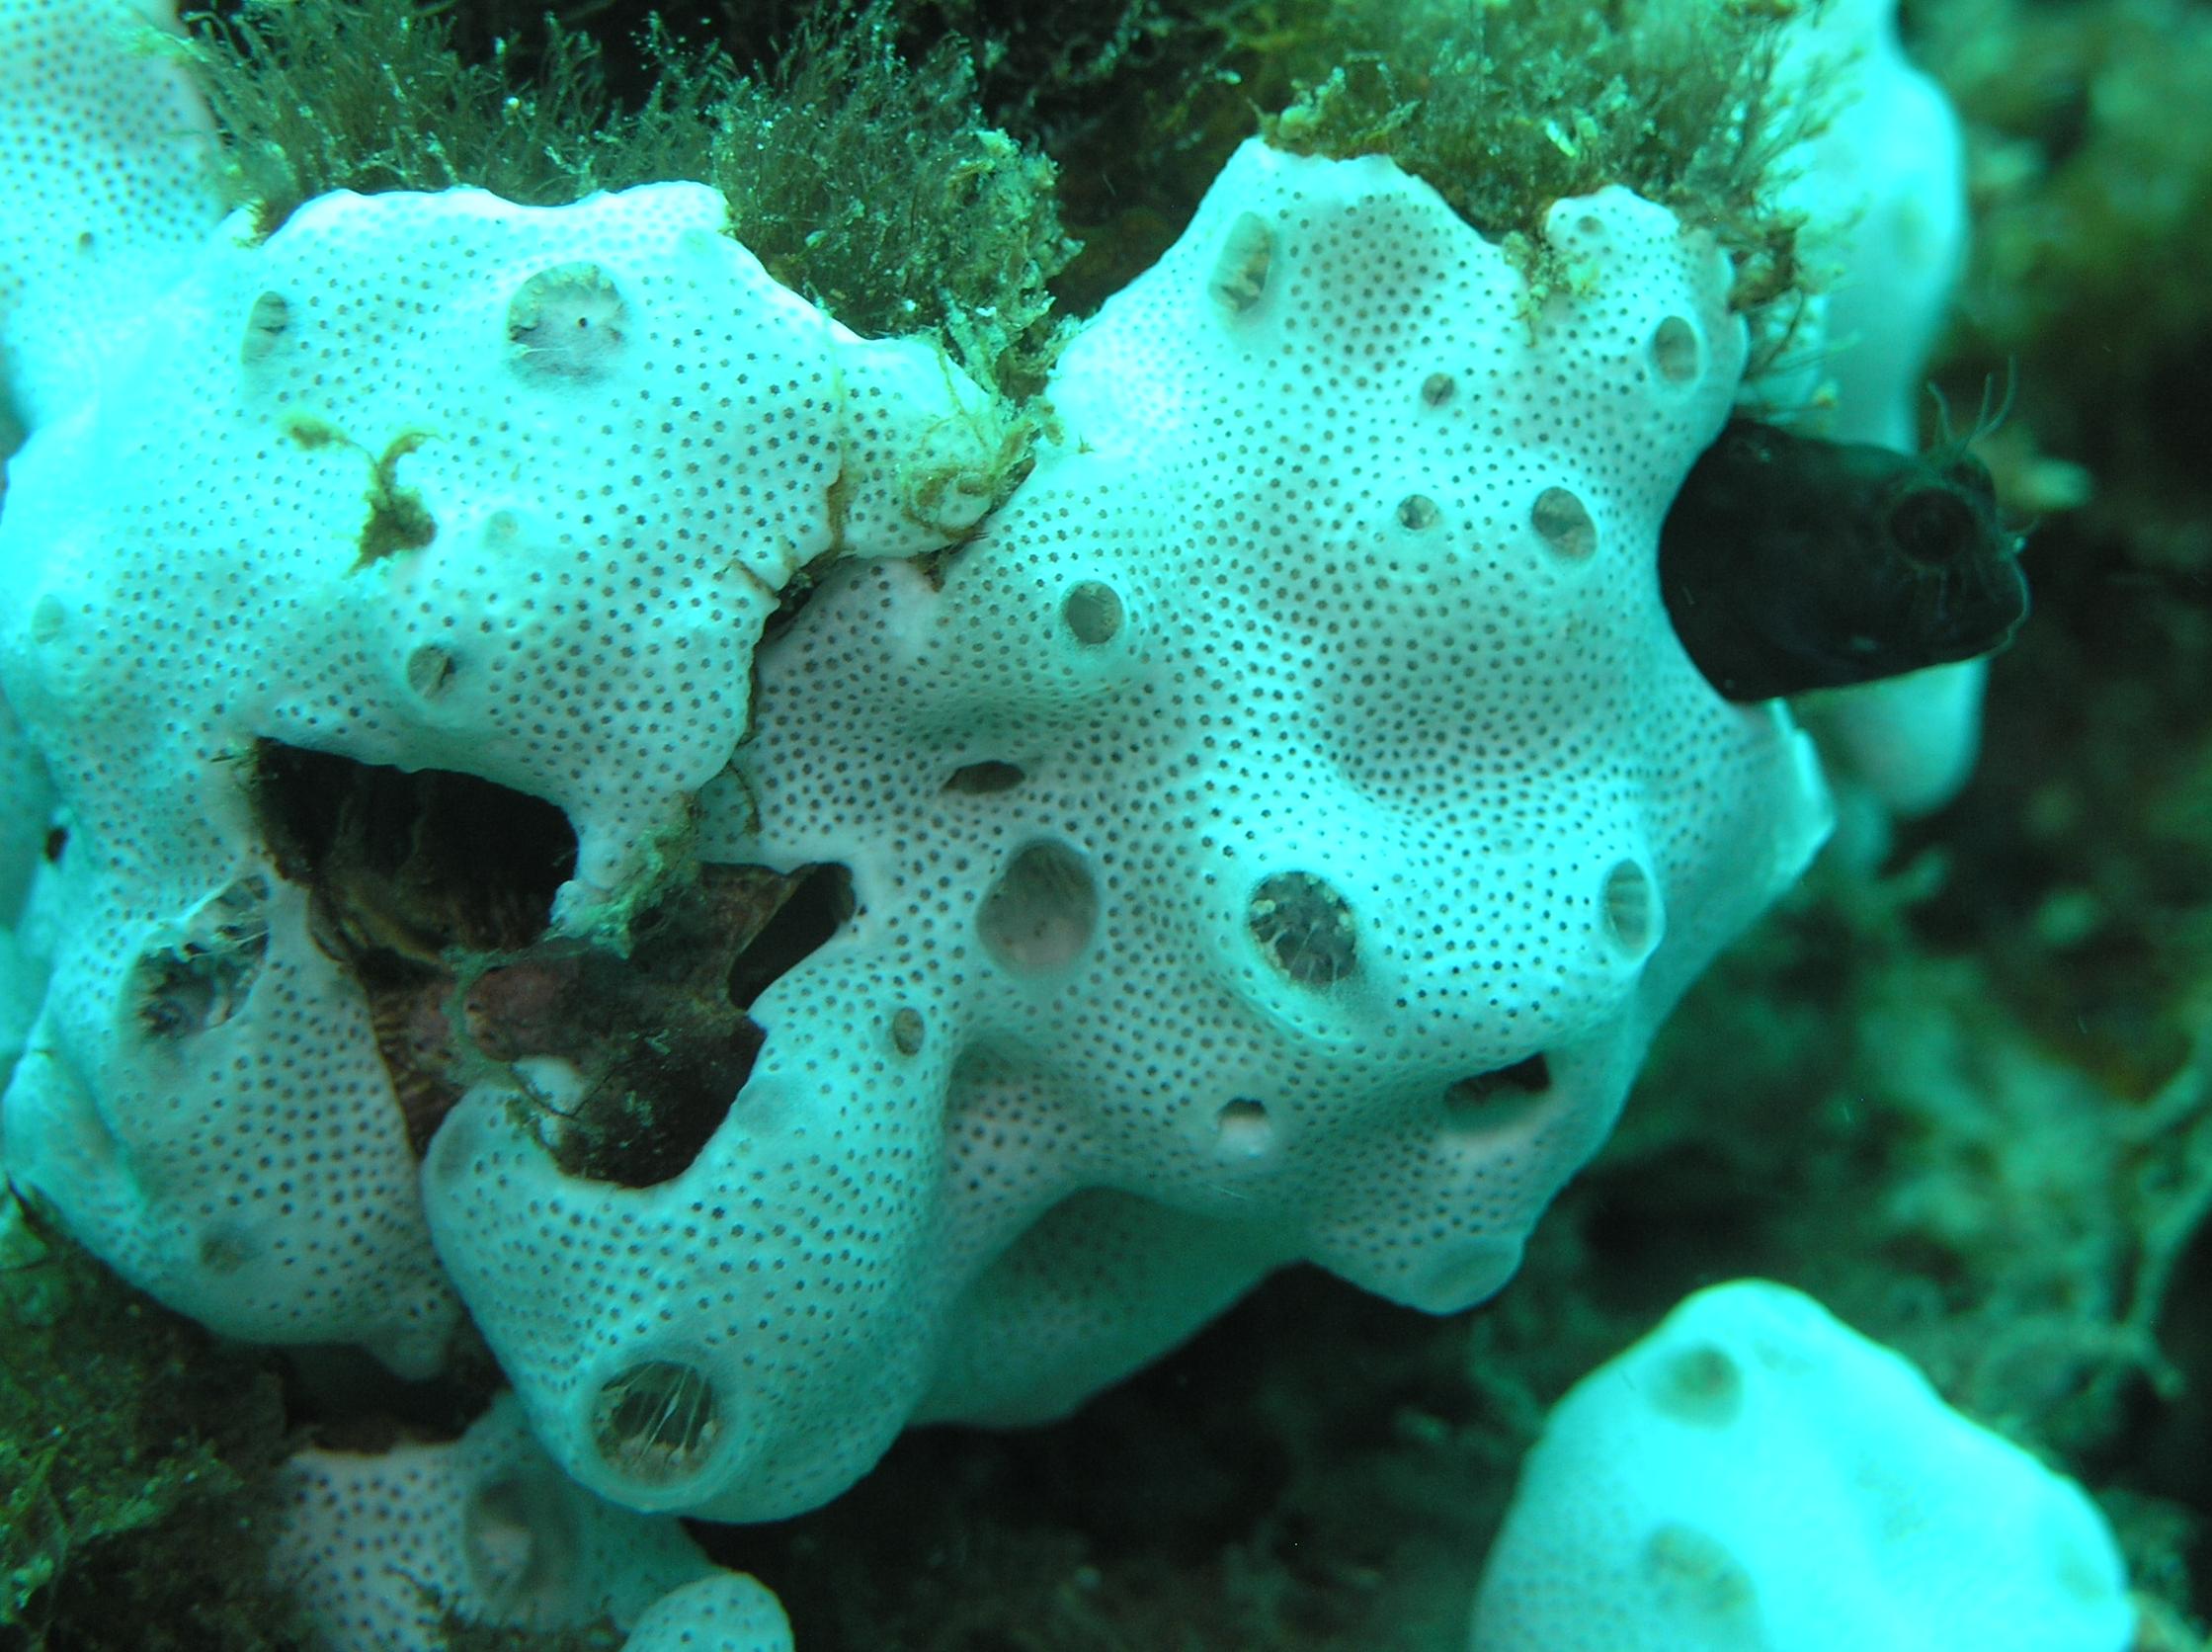 sponge or tunicate?